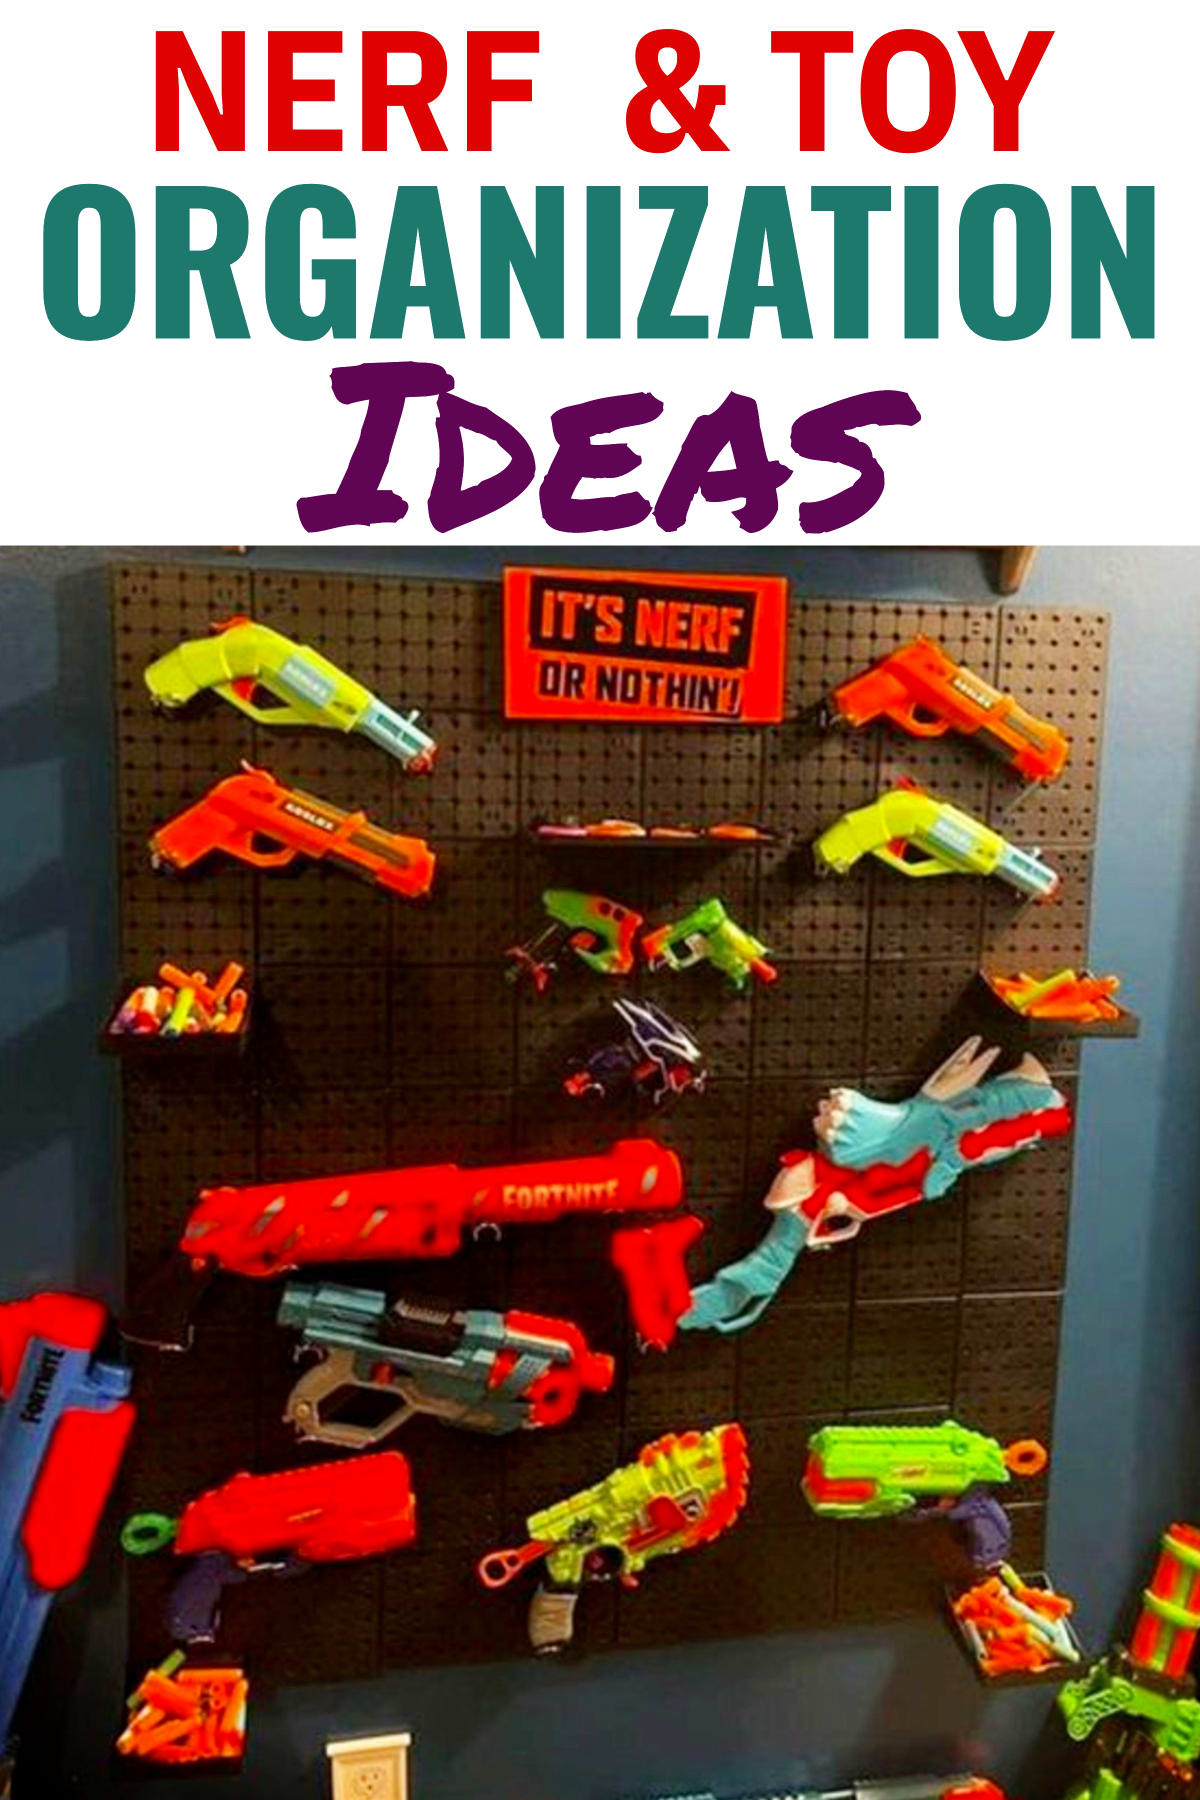 NERF toy organization ideas